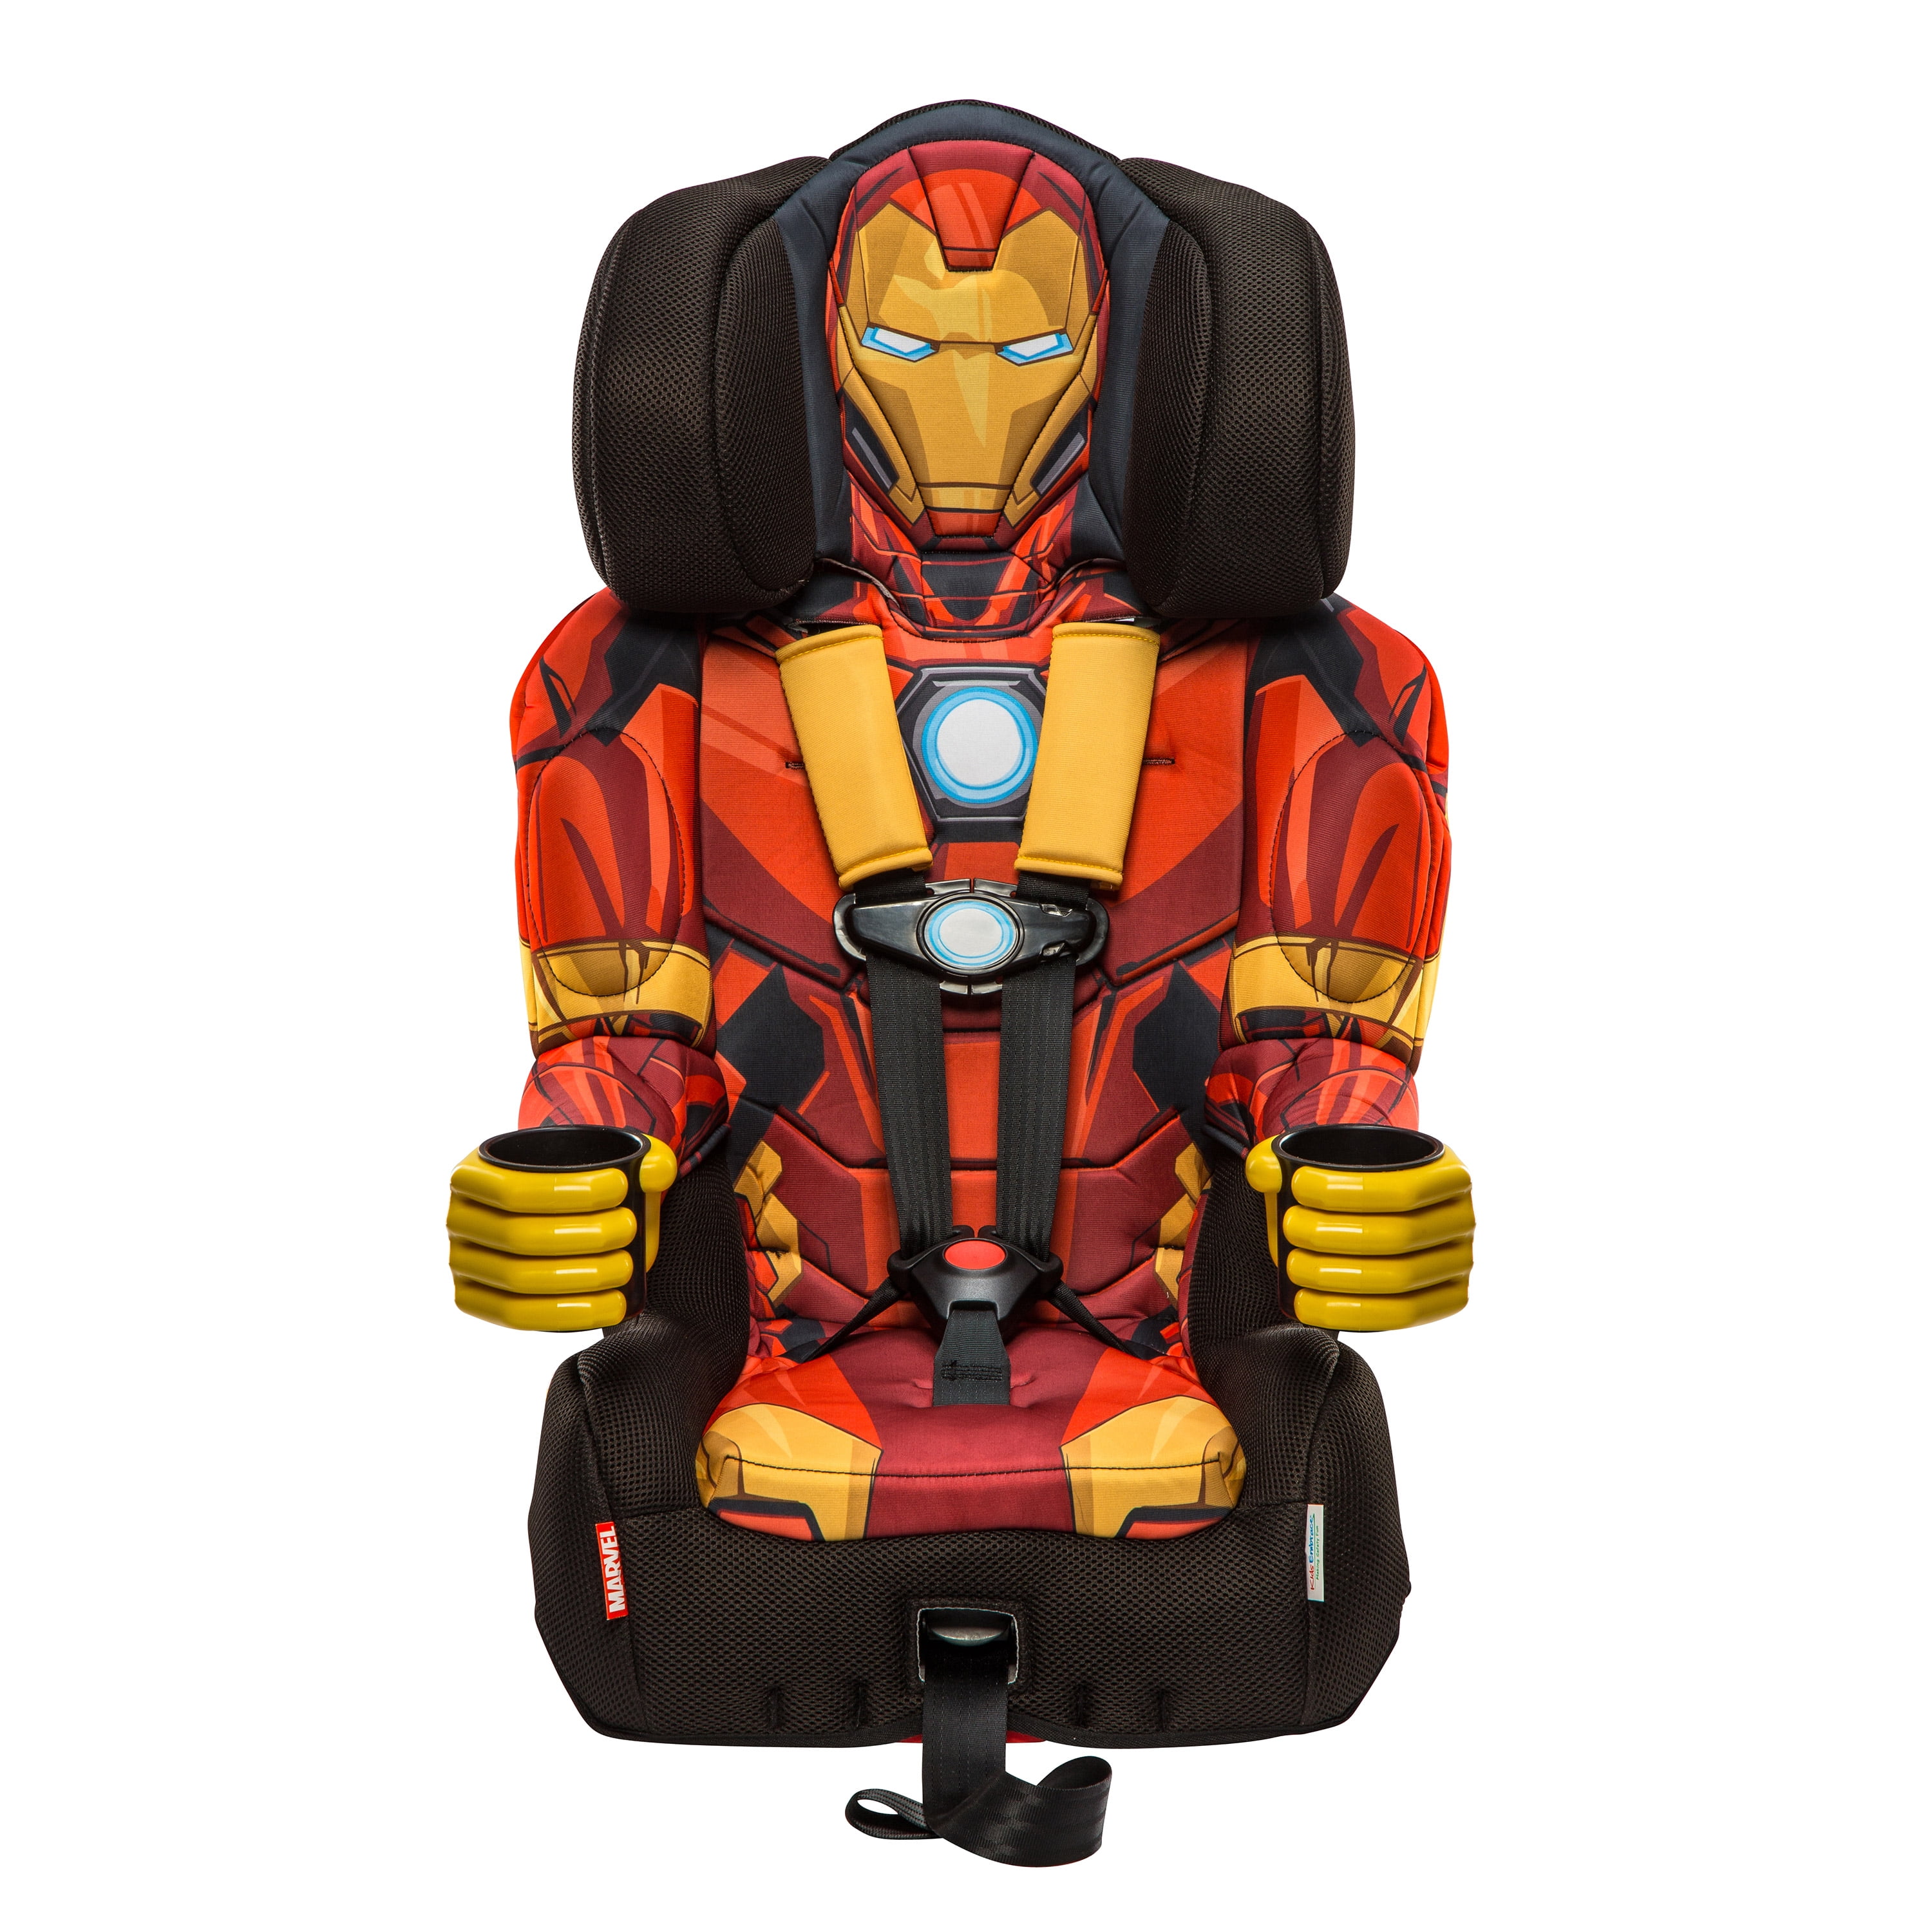 KidsEmbrace Combination Booster Car Seat, Marvel Avengers Iron Man